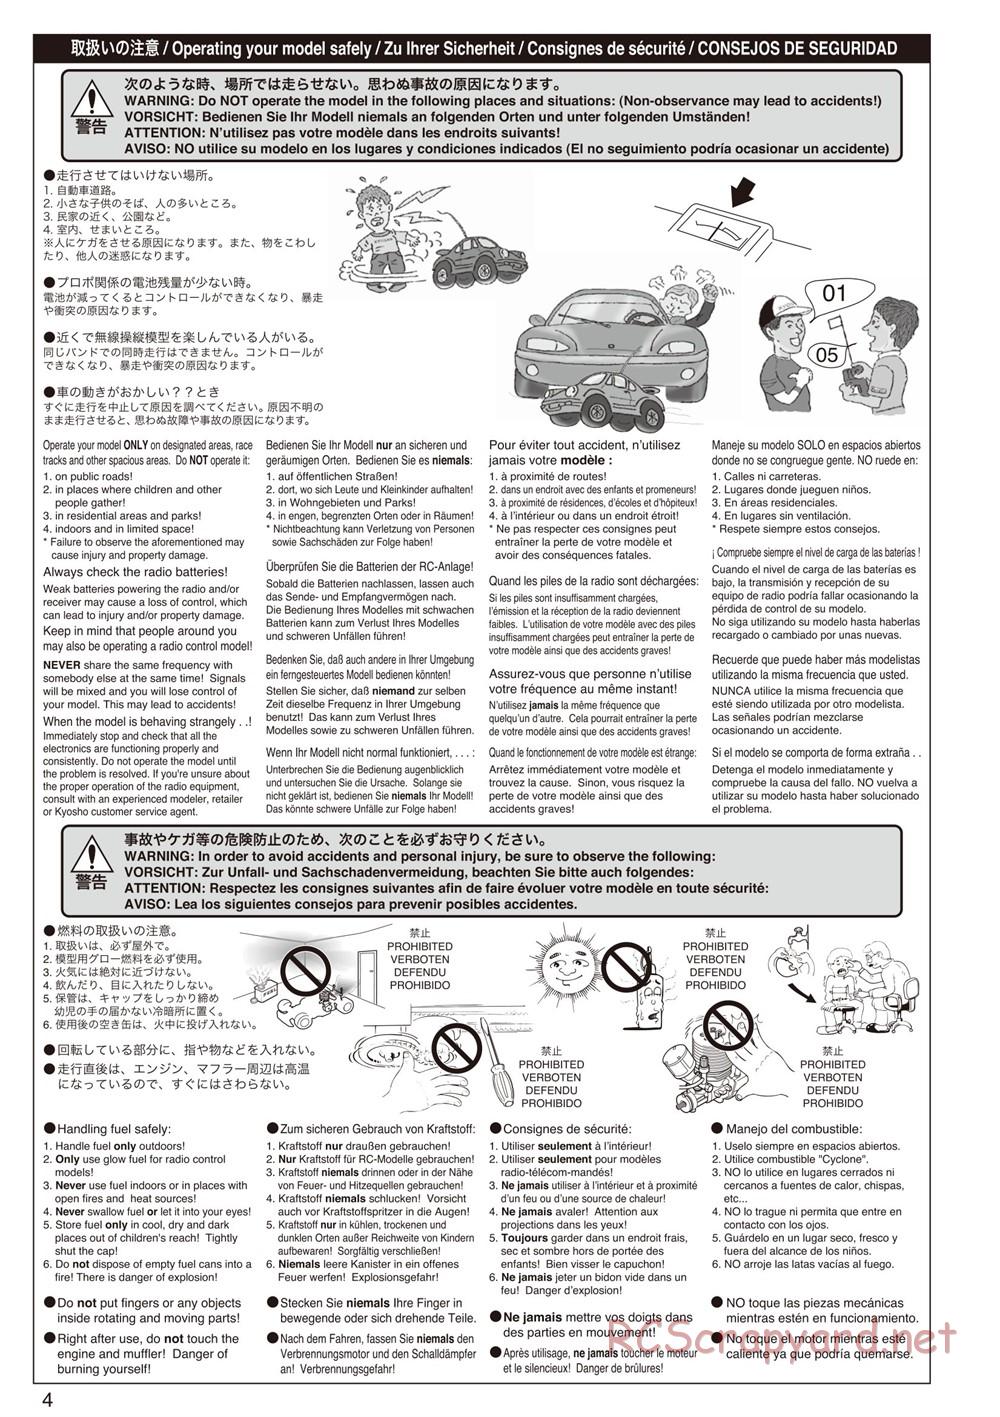 Kyosho - Birel R31-SE Kart - Manual - Page 4